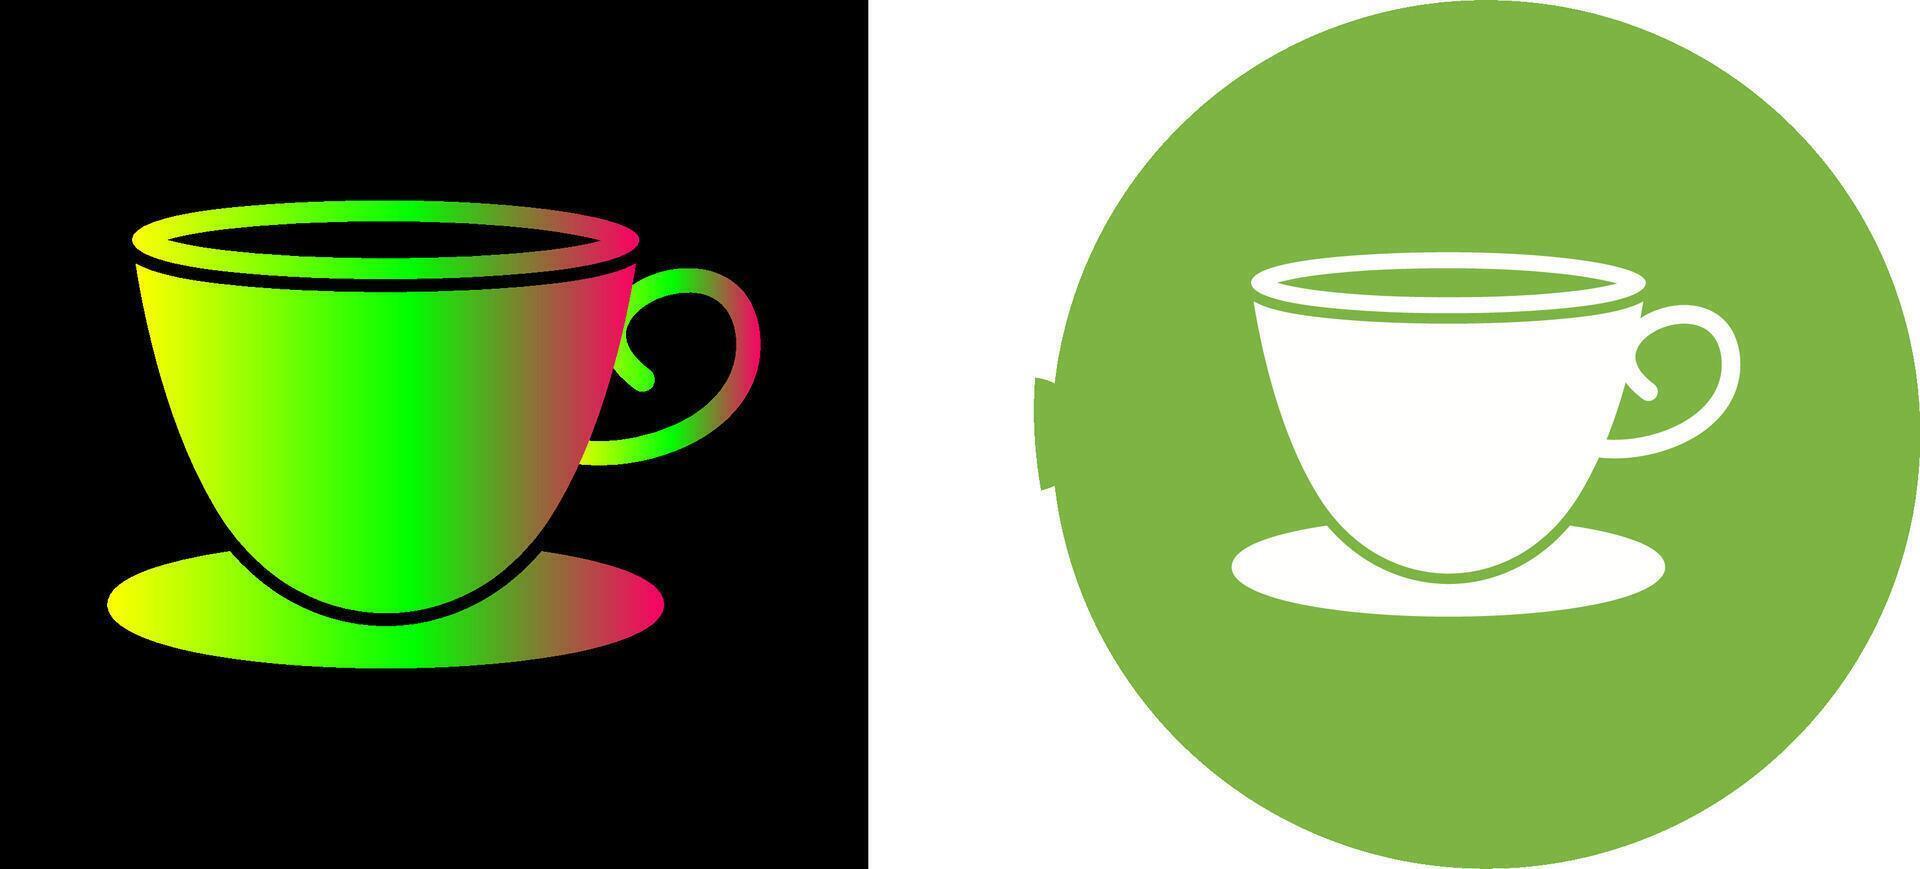 diseño de icono de taza de té vector